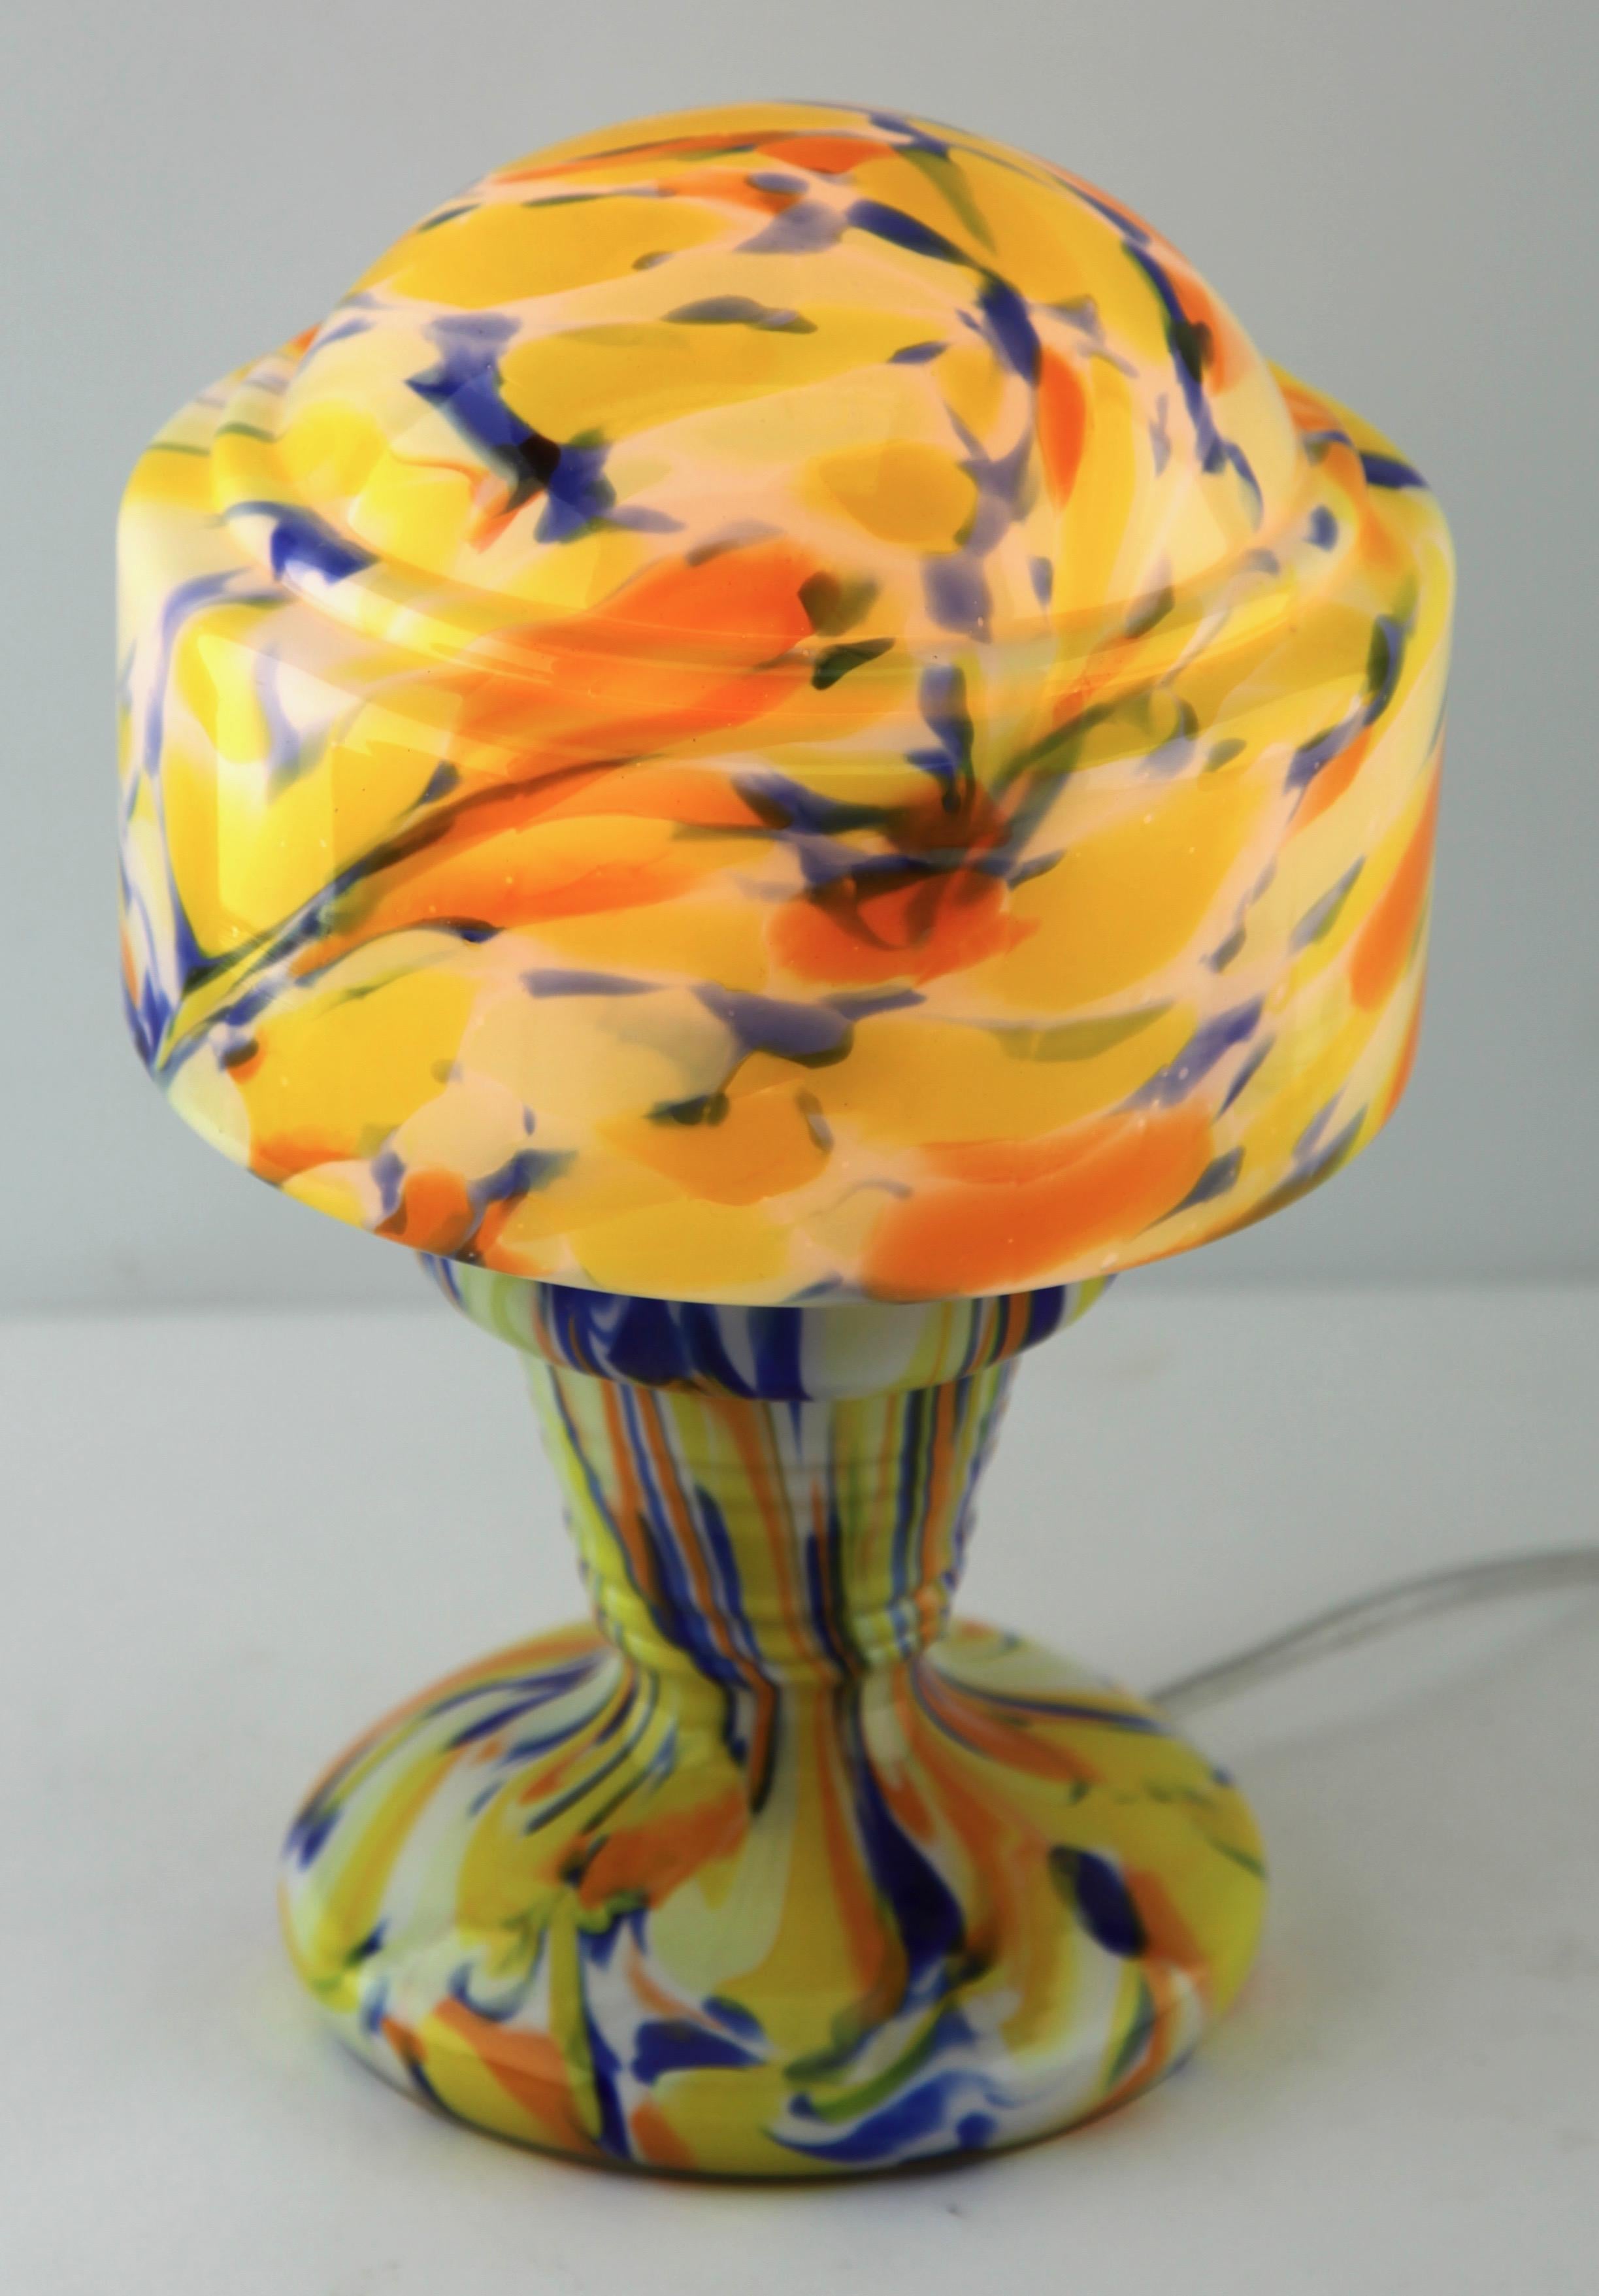 Art-déco-Tischlampe aus mehrfarbigem Splatter-Glas Scailmont Belgien 1930er Jahre (Art nouveau)